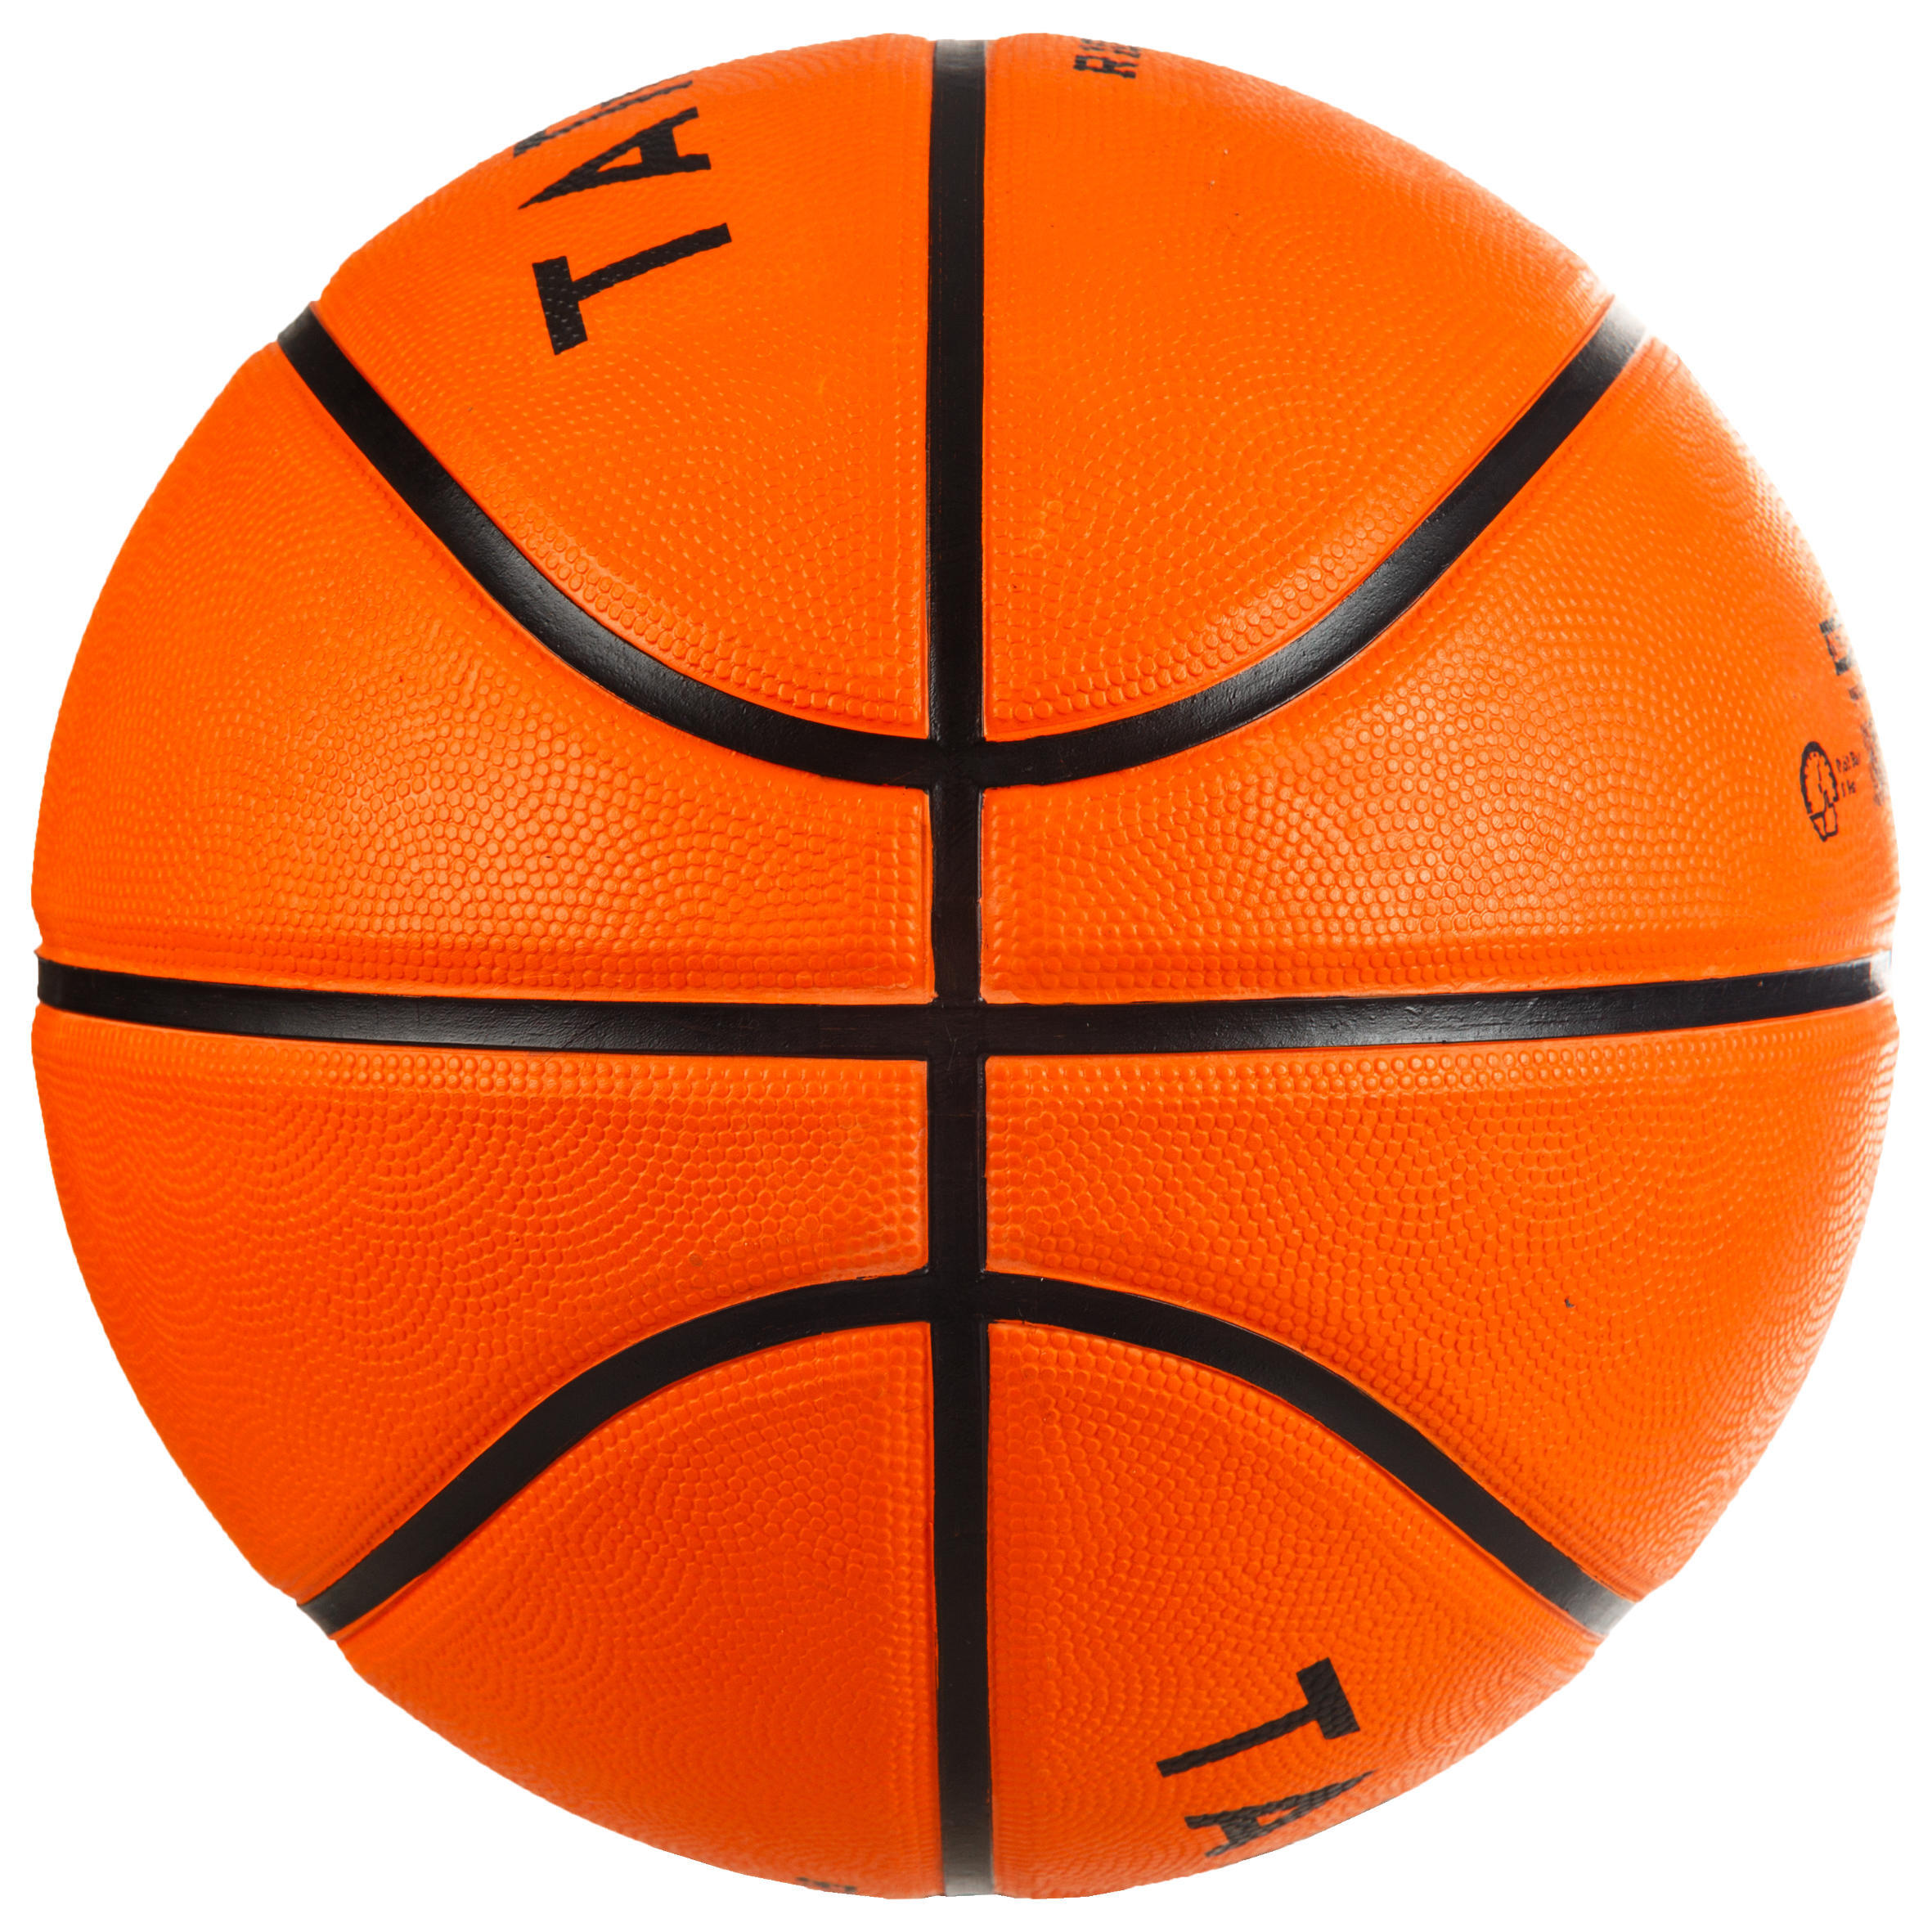 Kids'/Adult Size 7 Basketball R100 - Orange. 4/5